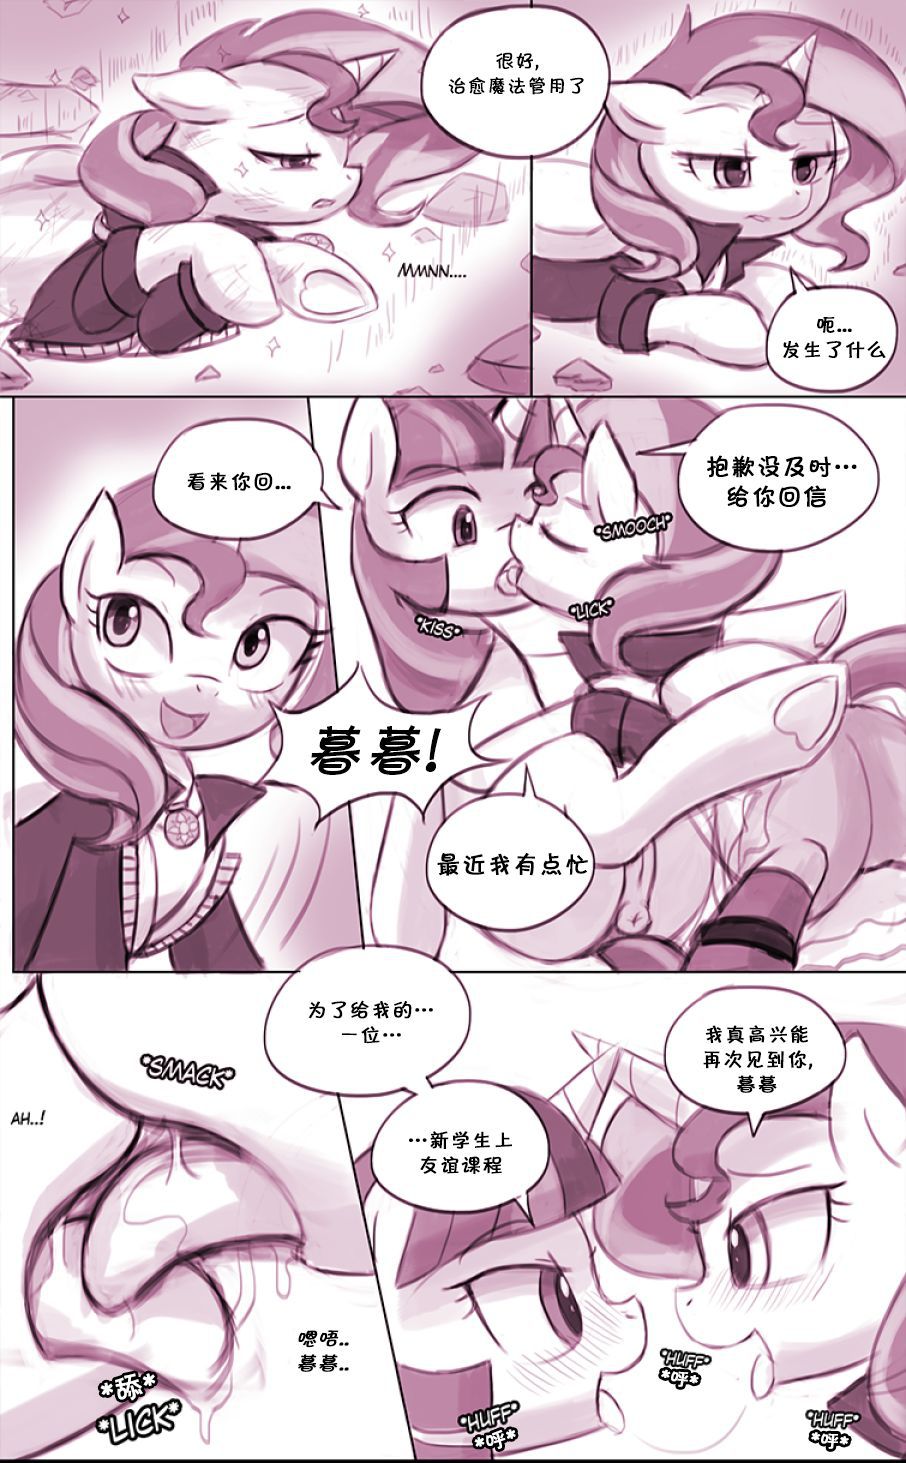 [Lumineko] Homesick | 吾心归处是吾乡 (My Little Pony: Friendship is Magic) [Chinese] [PhoenixTranslation] 【Lumineko】【PhoenixTranslation】Homesick 10